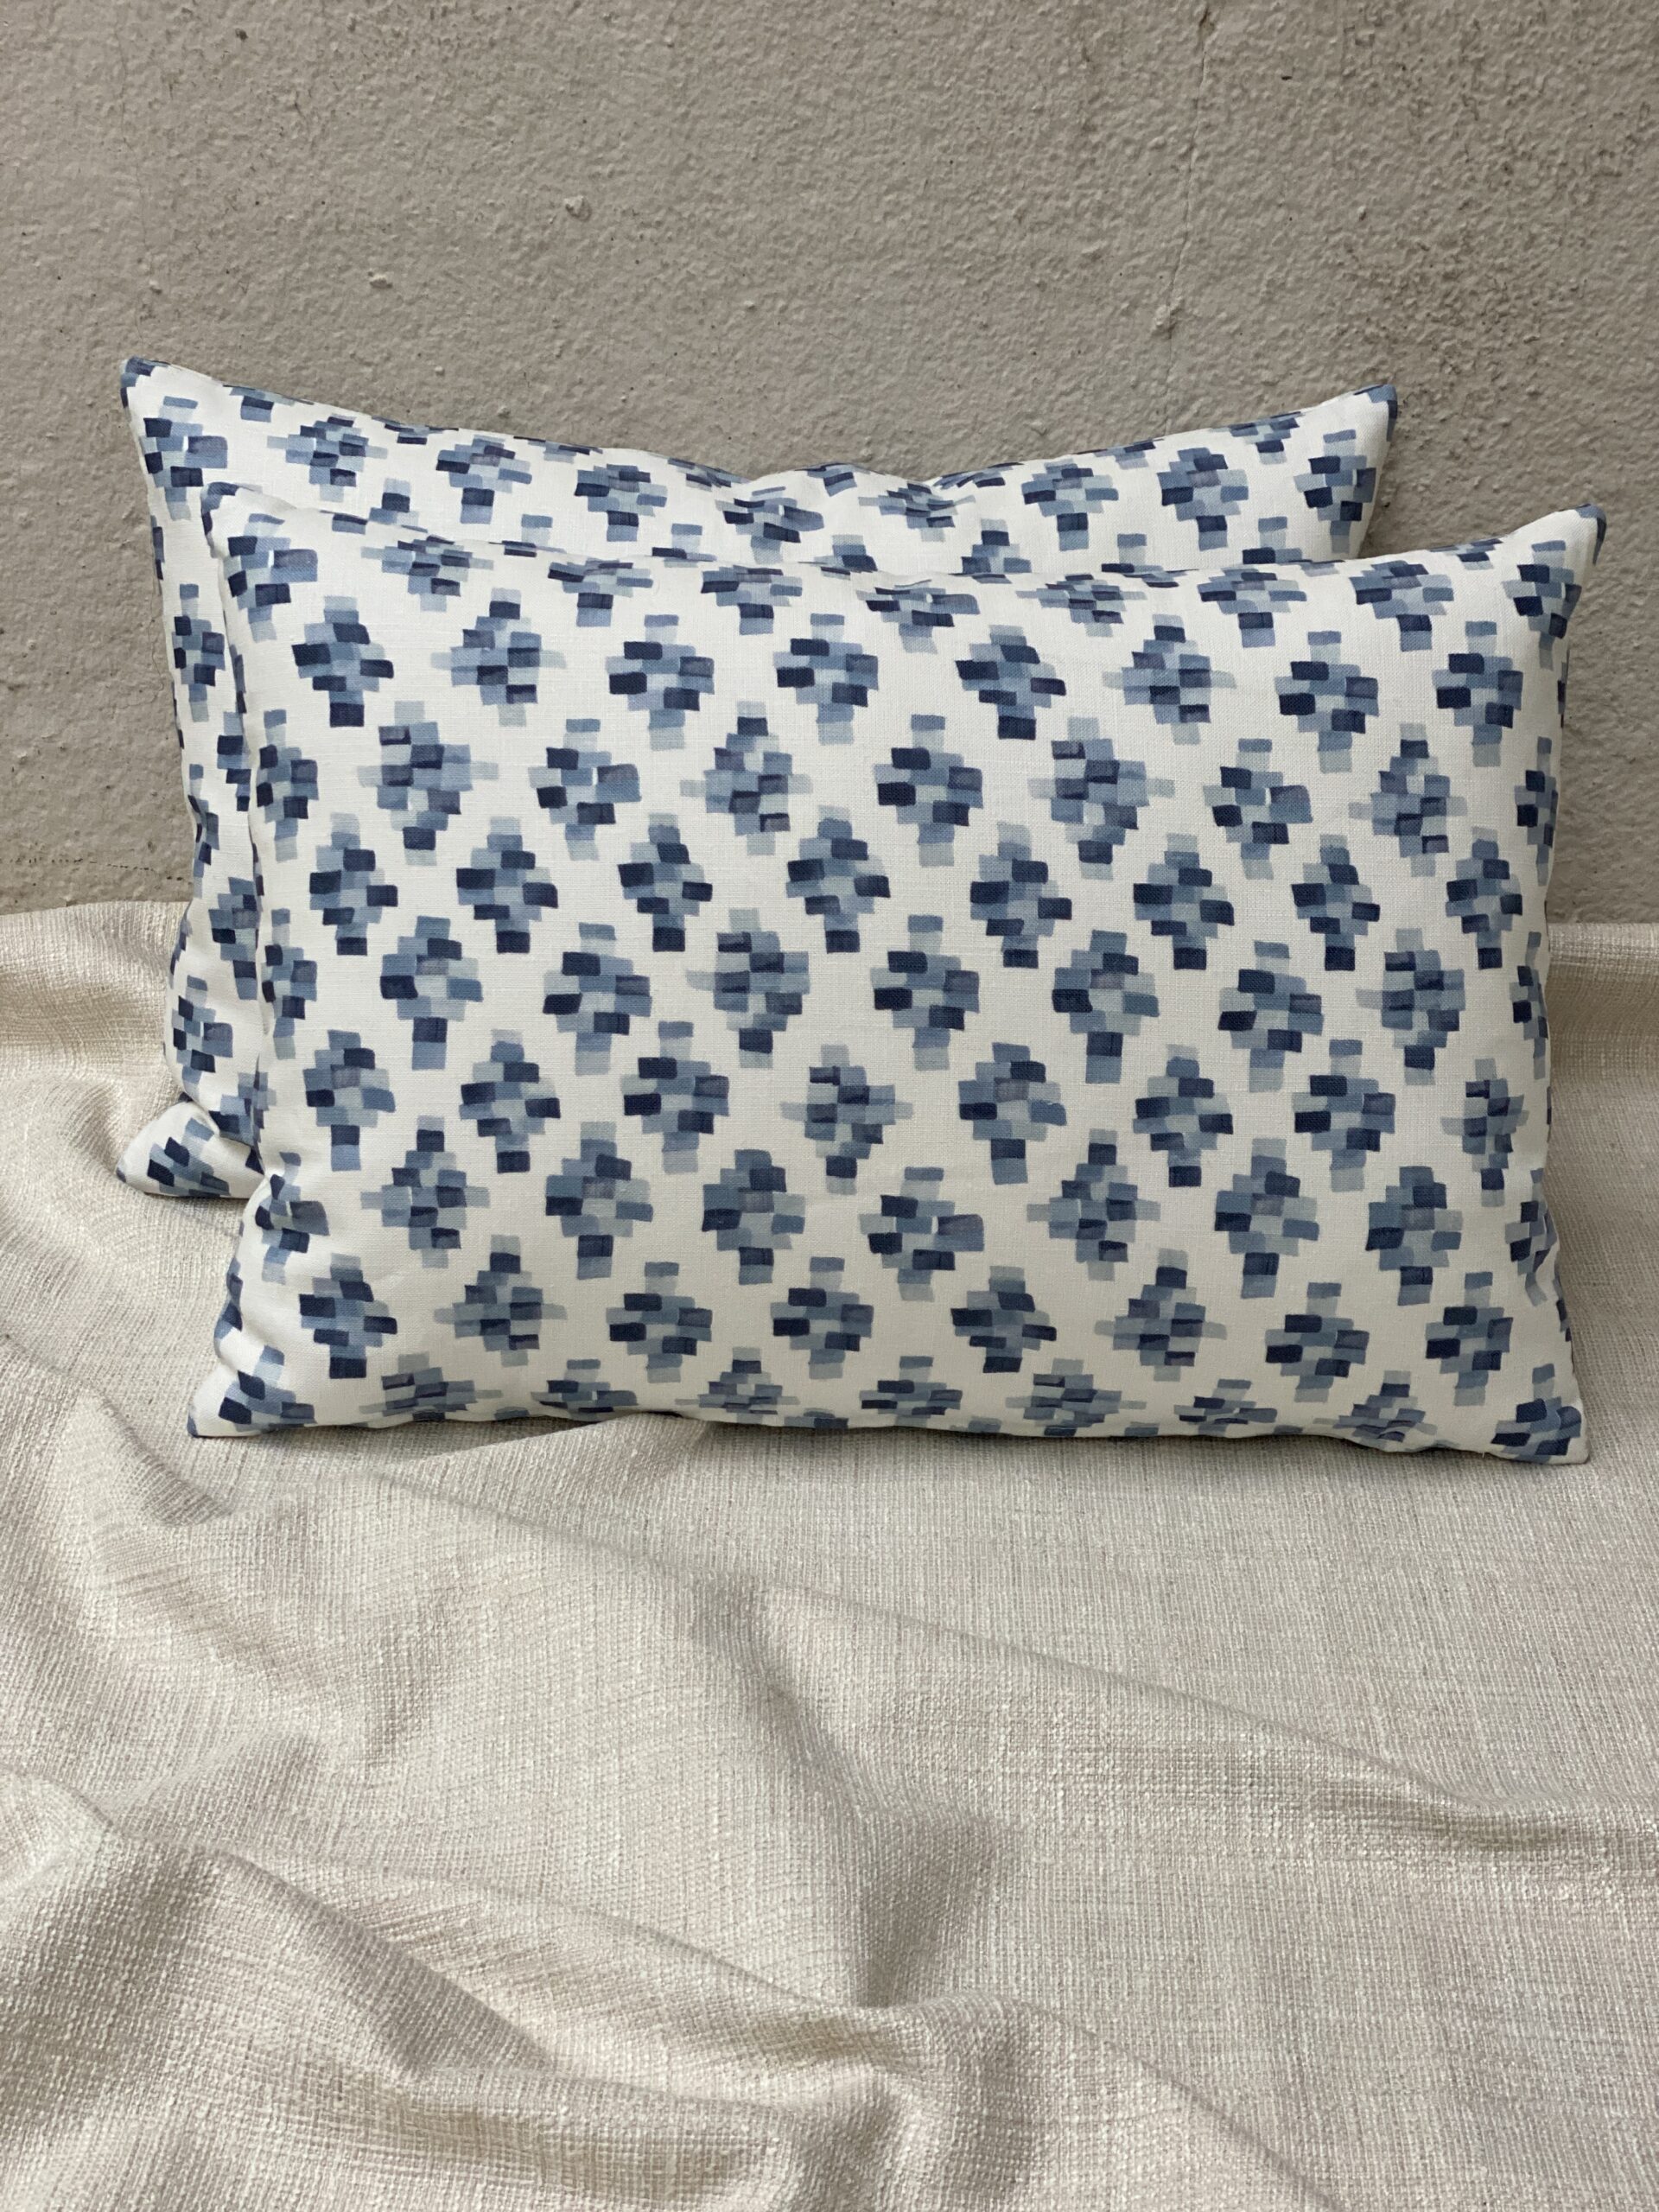 Hannah Laird Interiors x Rebecca Atwood Pillows